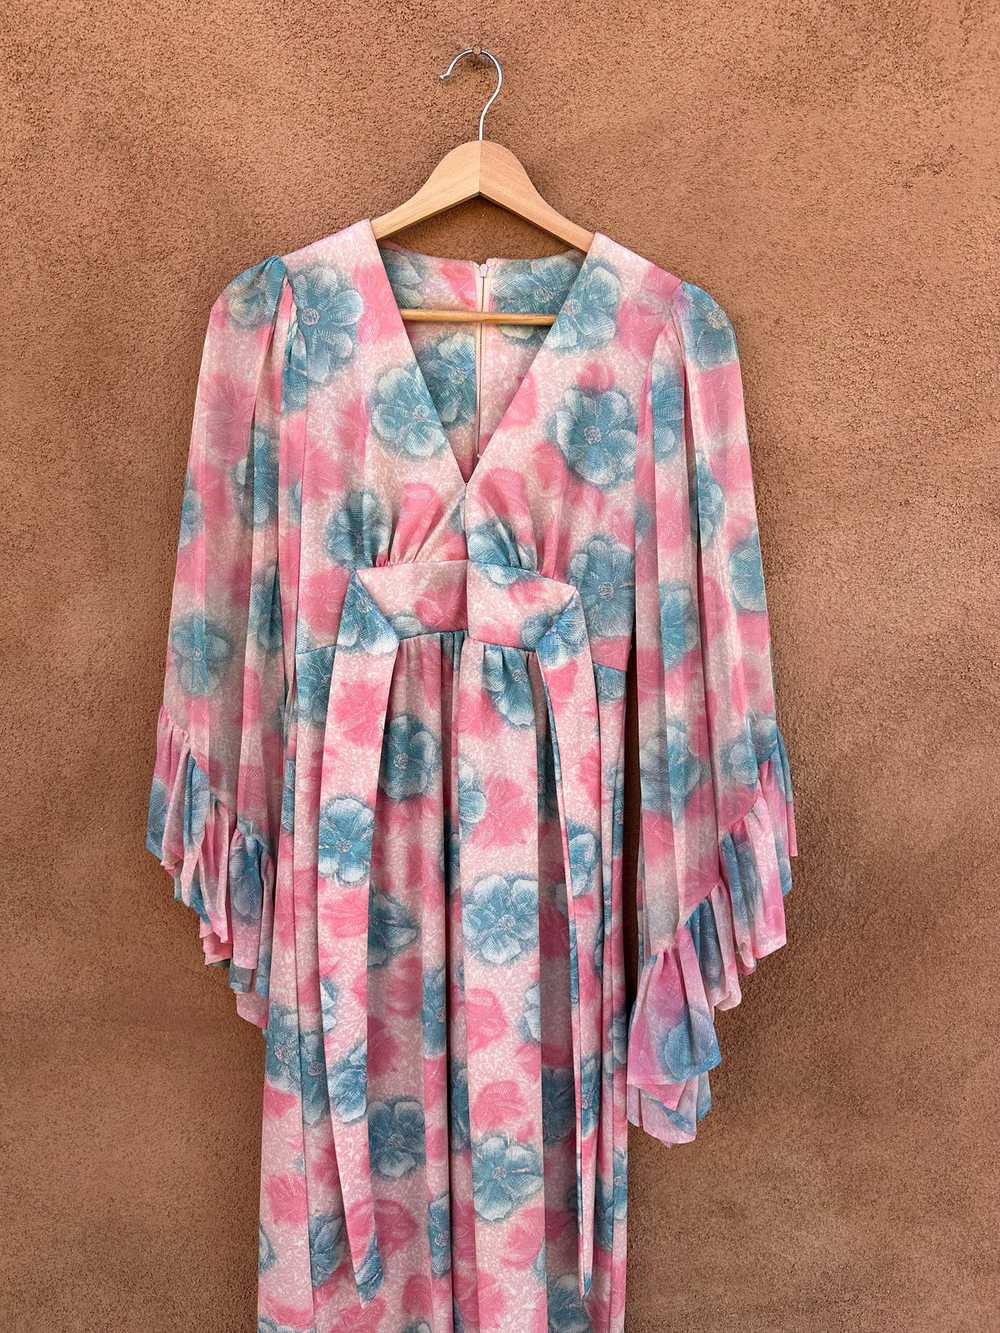 1960's Pink & Blue Floral Flowy Dress - image 4